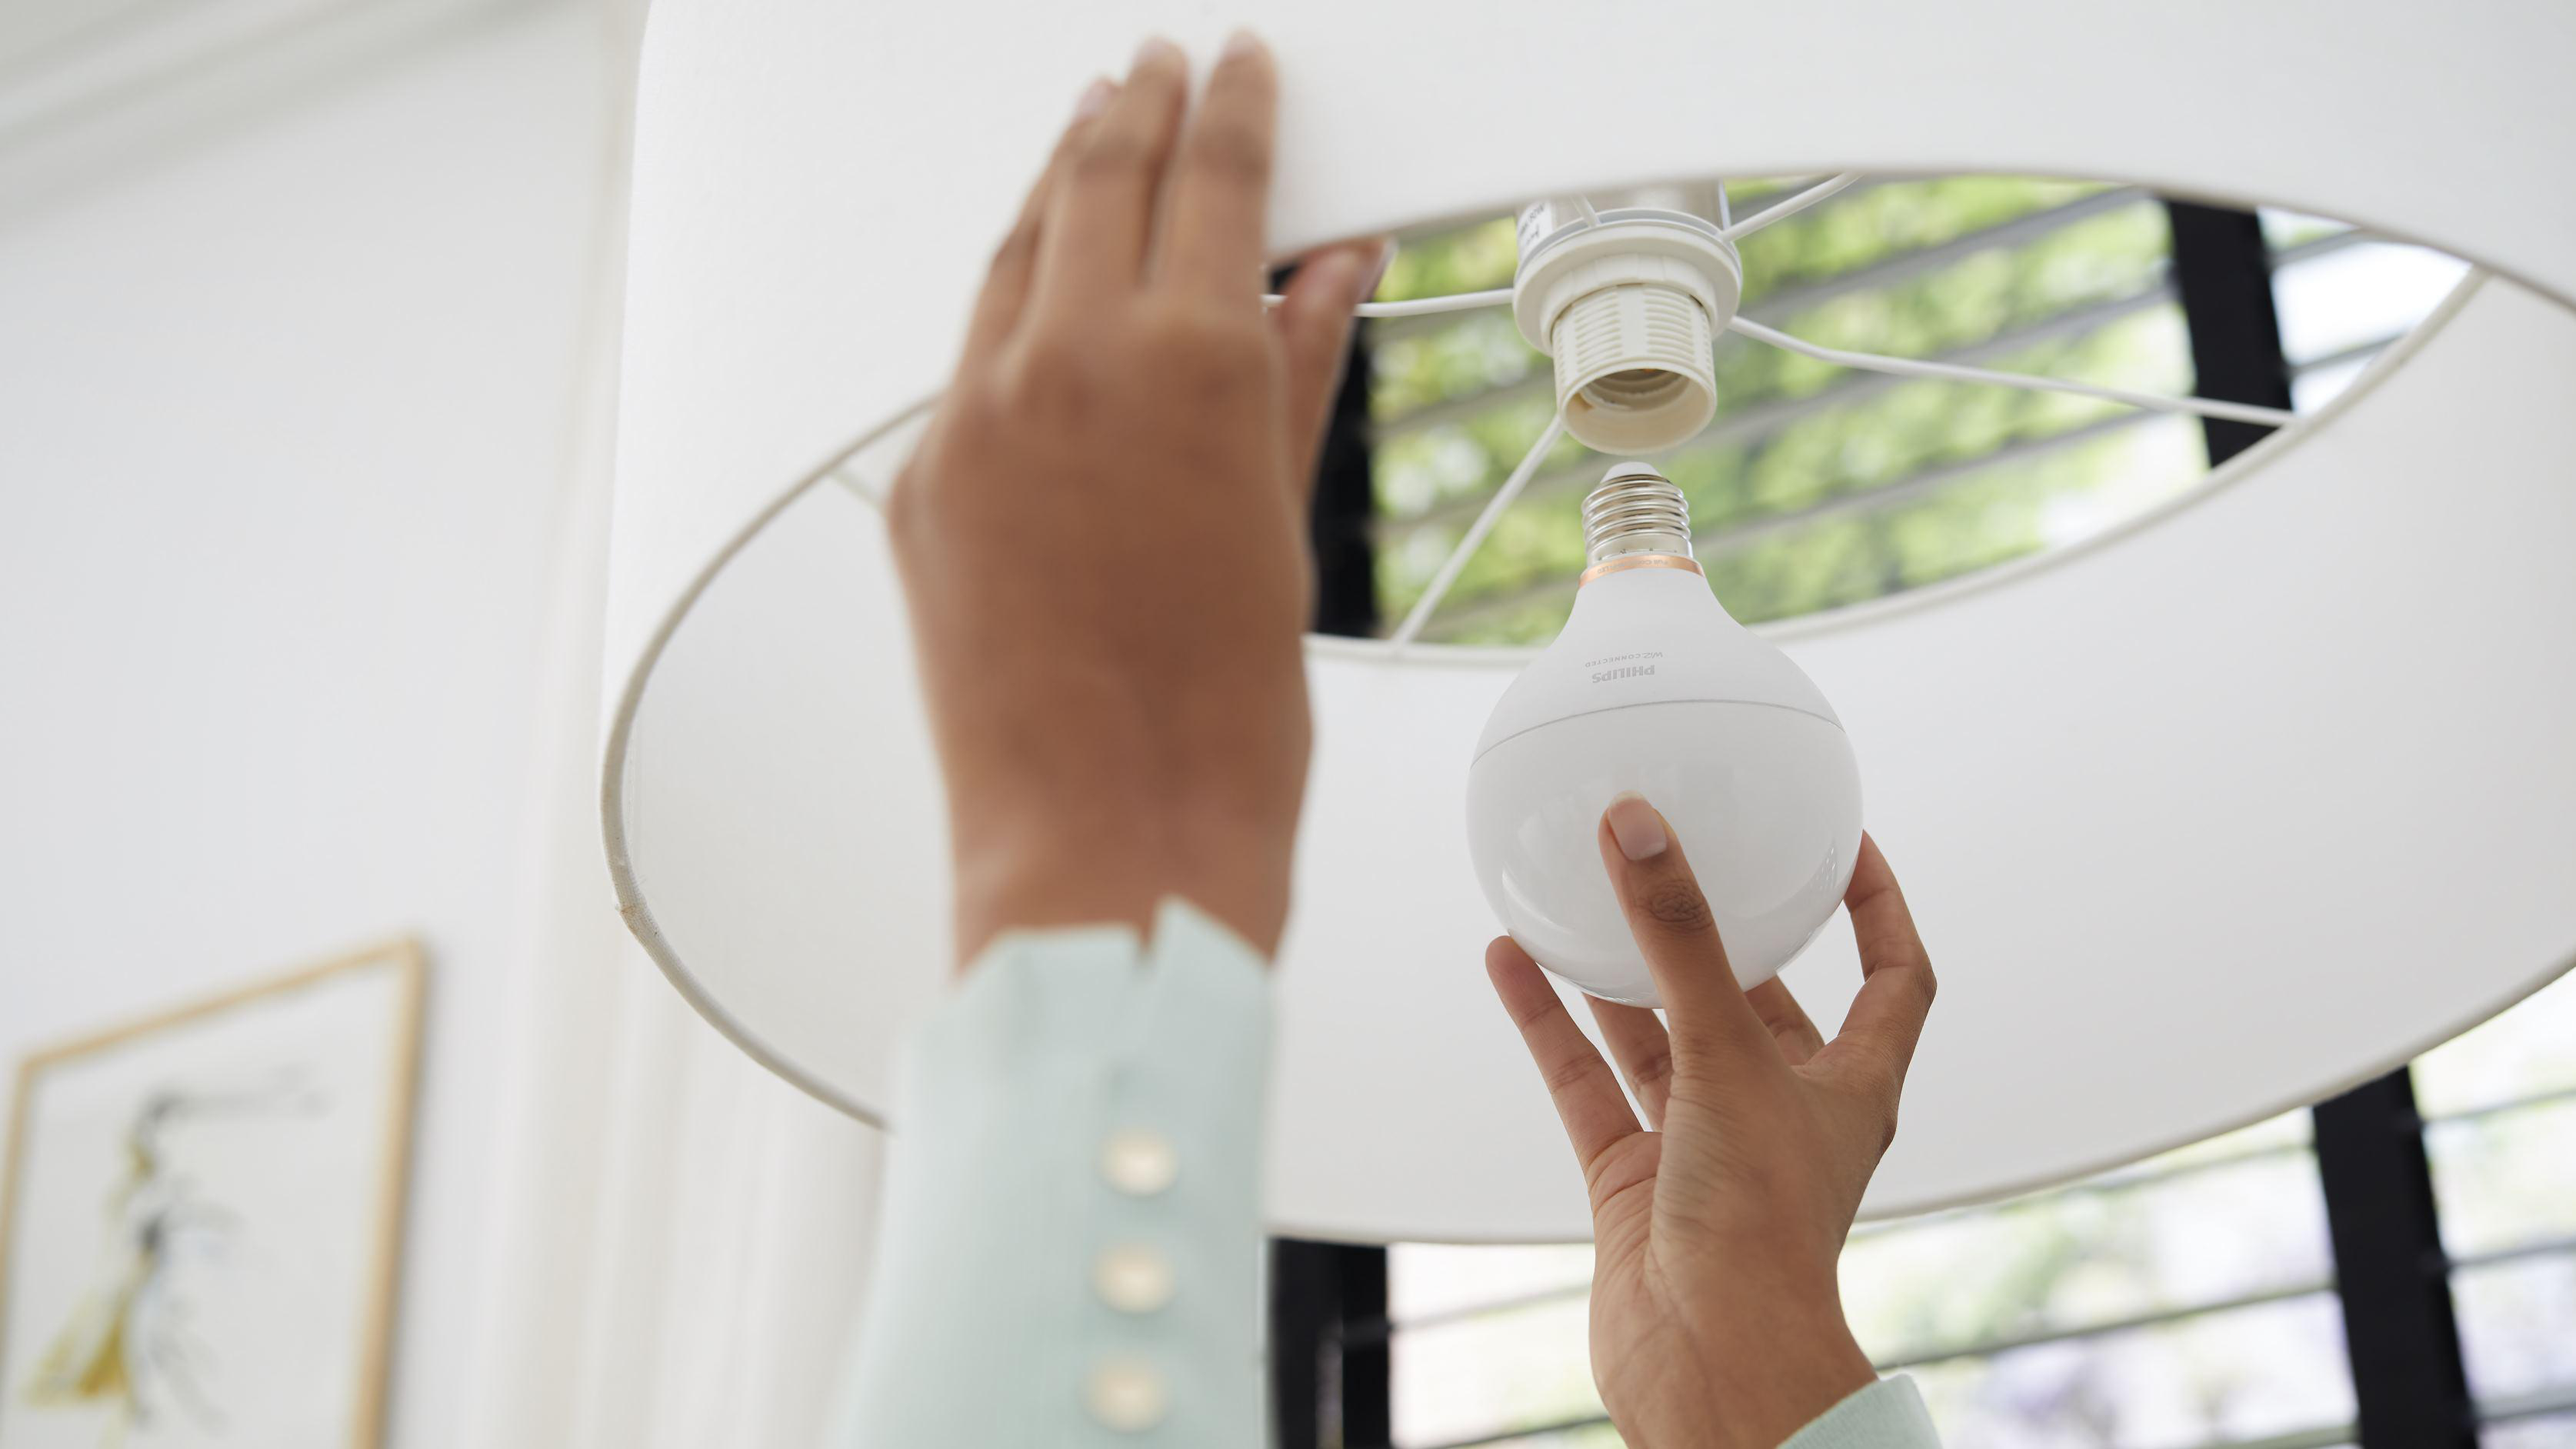 PHILIPS Smart Tunable Kelvin Globeform LED White Einzelpack 75W Glühbirne 2700-6500 Smarte